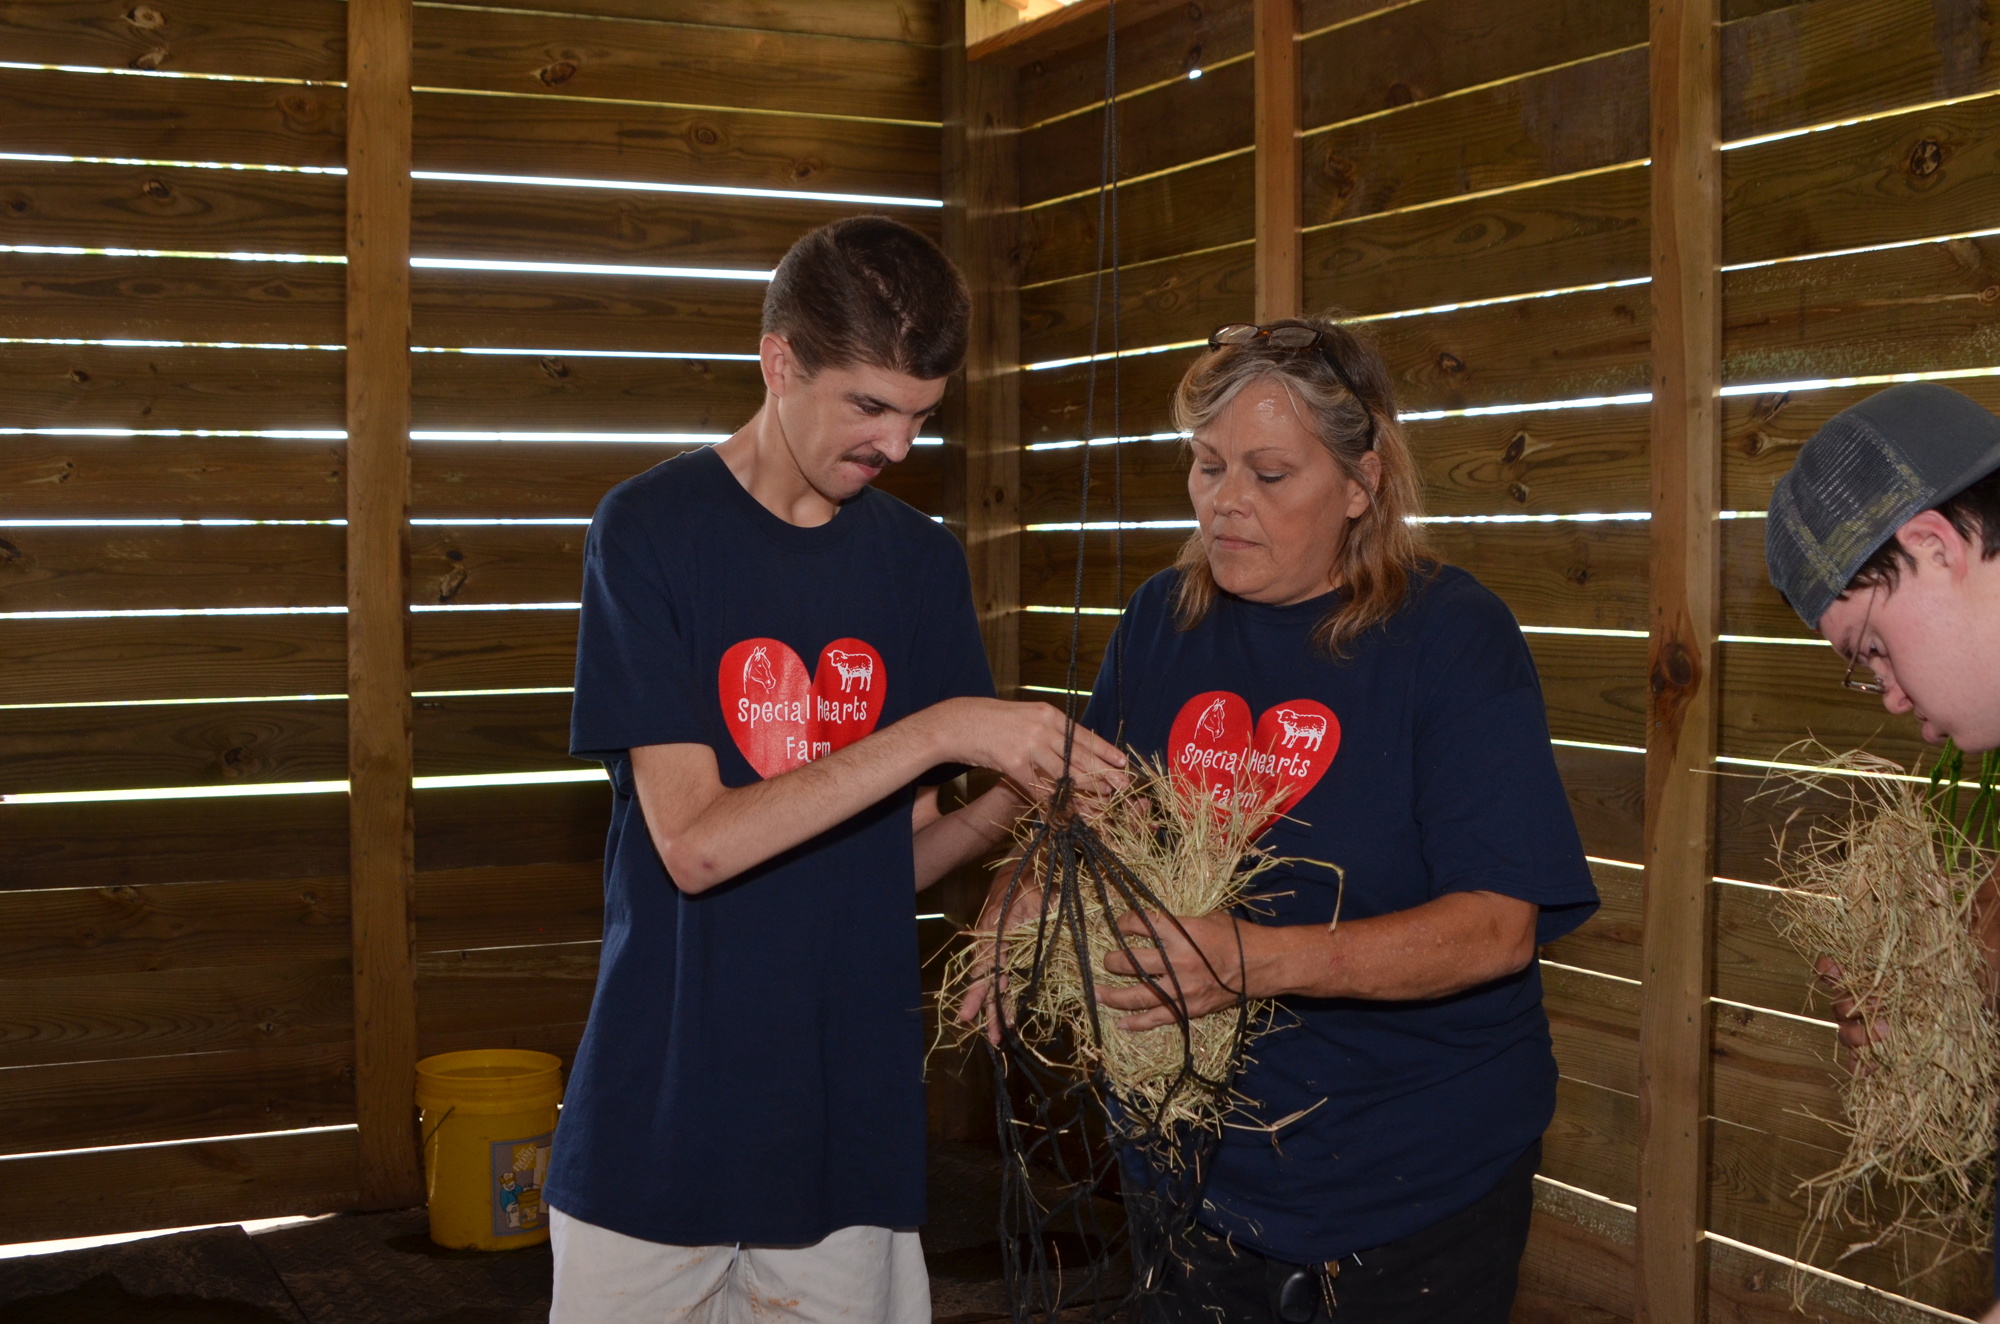 Evan Pryor helps staff member Sherry Easley with the hay.